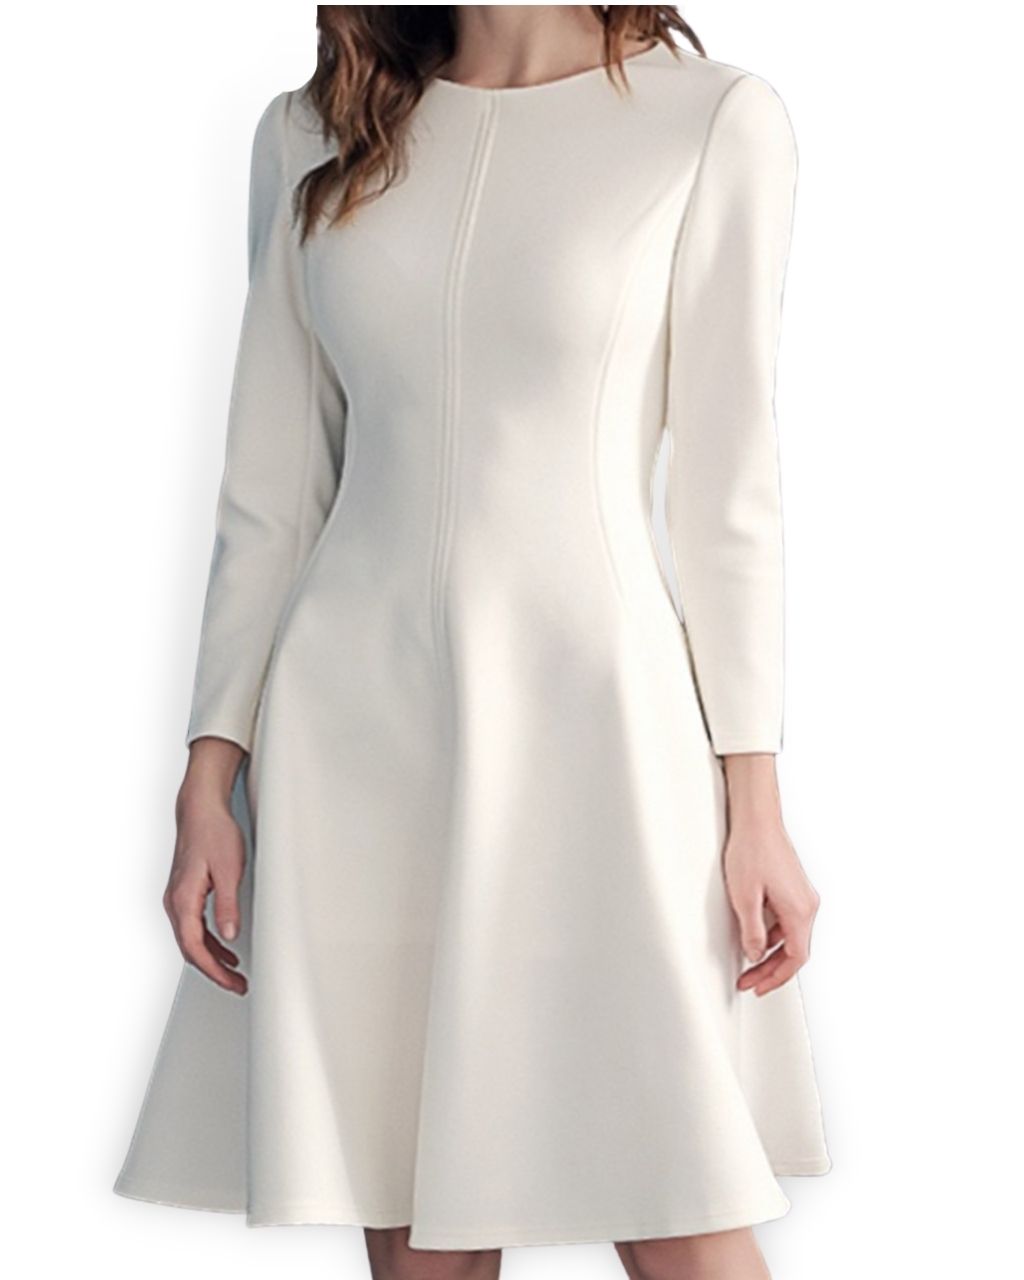 ADKN Nora White Midi Dress with Sleeves - White Skater Dress